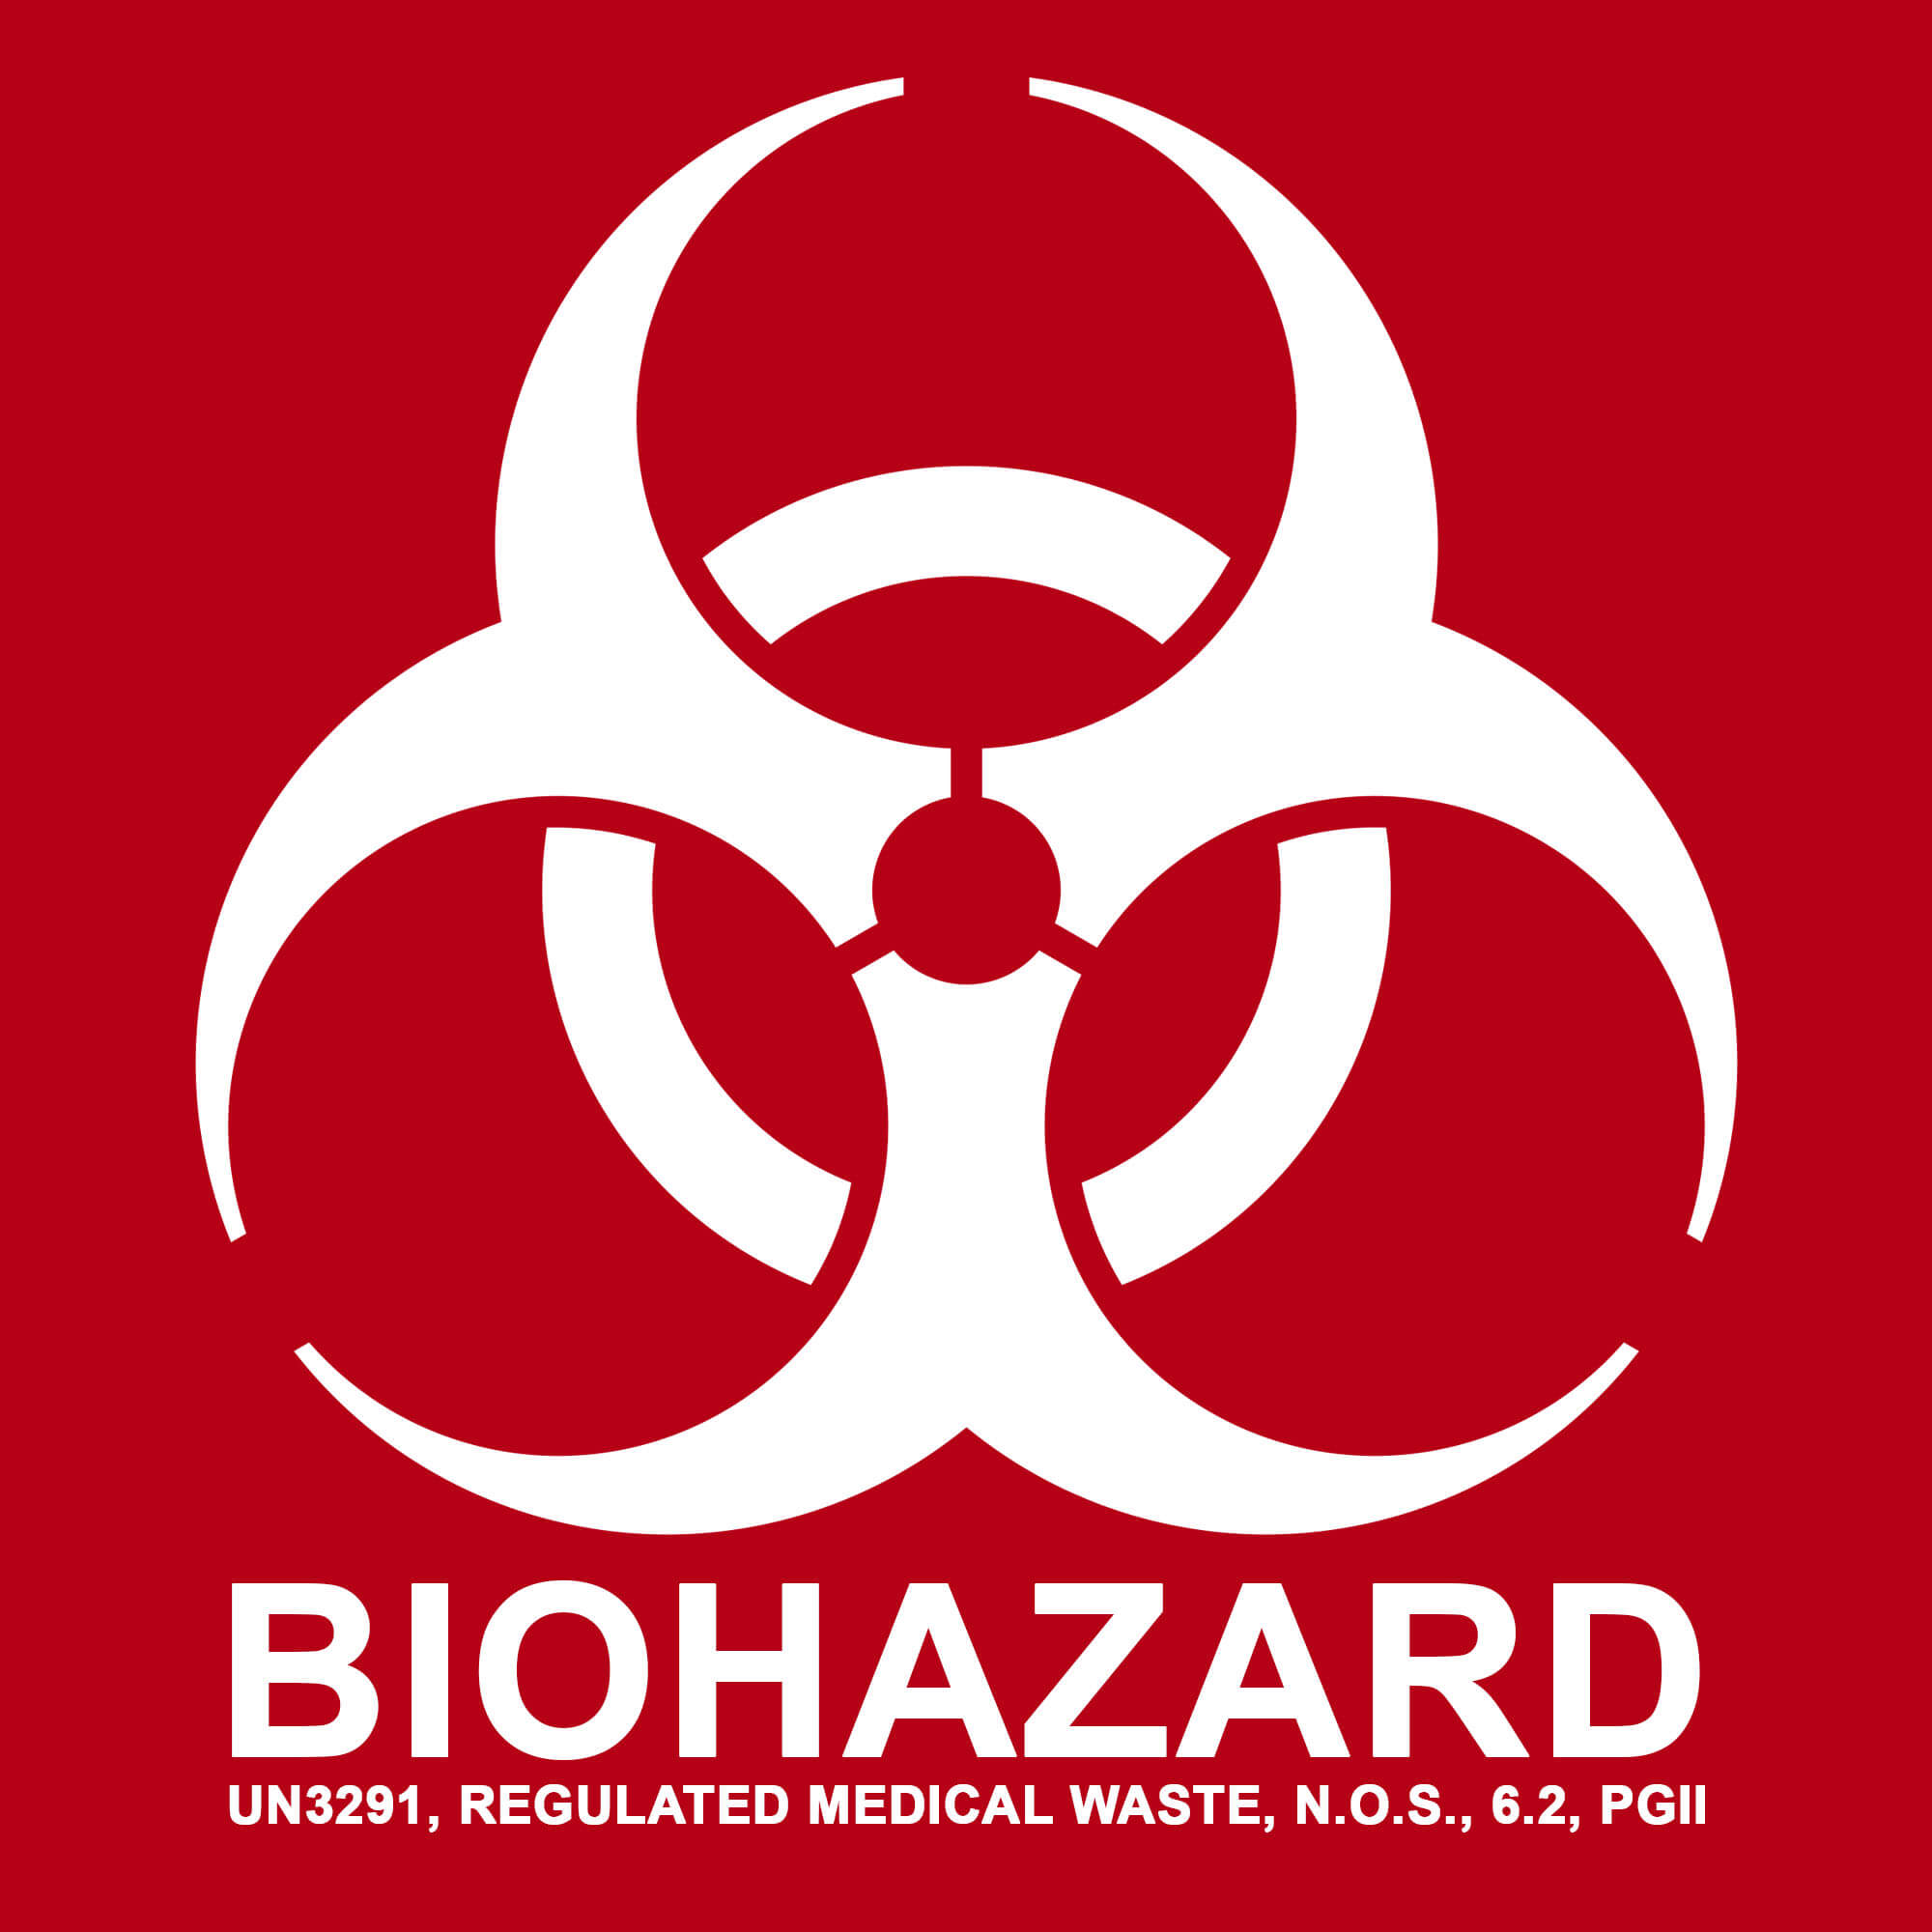 image of the biohazard logo